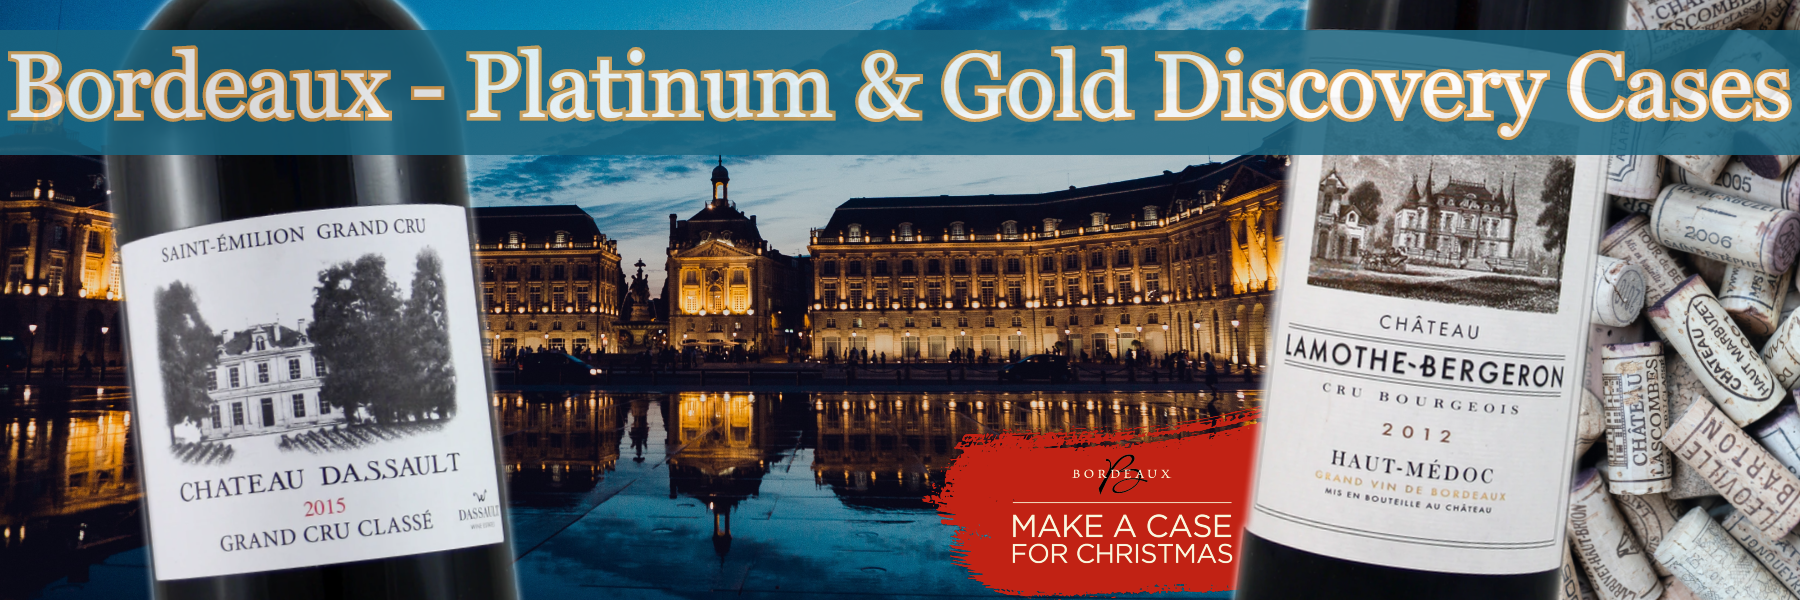 Bordeaux - Platinum & Gold Discovery Cases